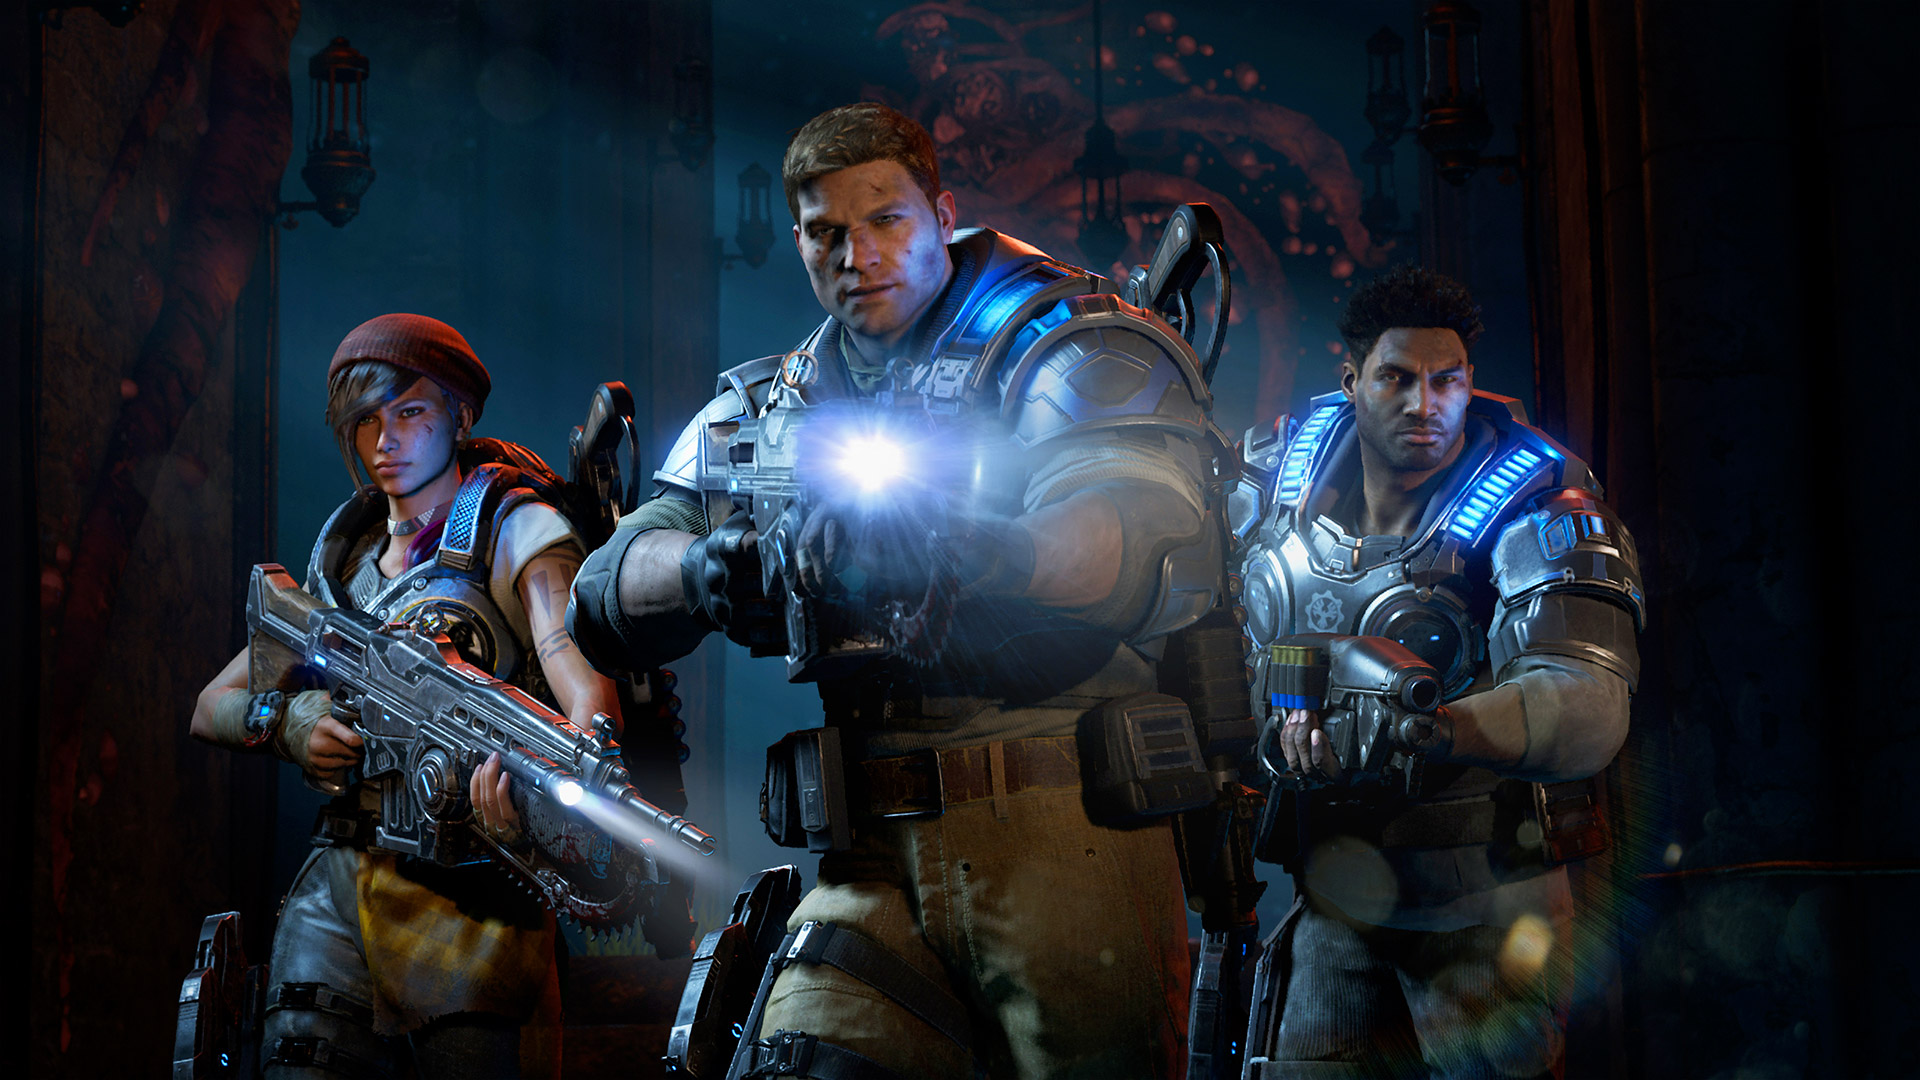 [Gamescom] Gears of War 4 nuovo video gameplay da PC in 4K